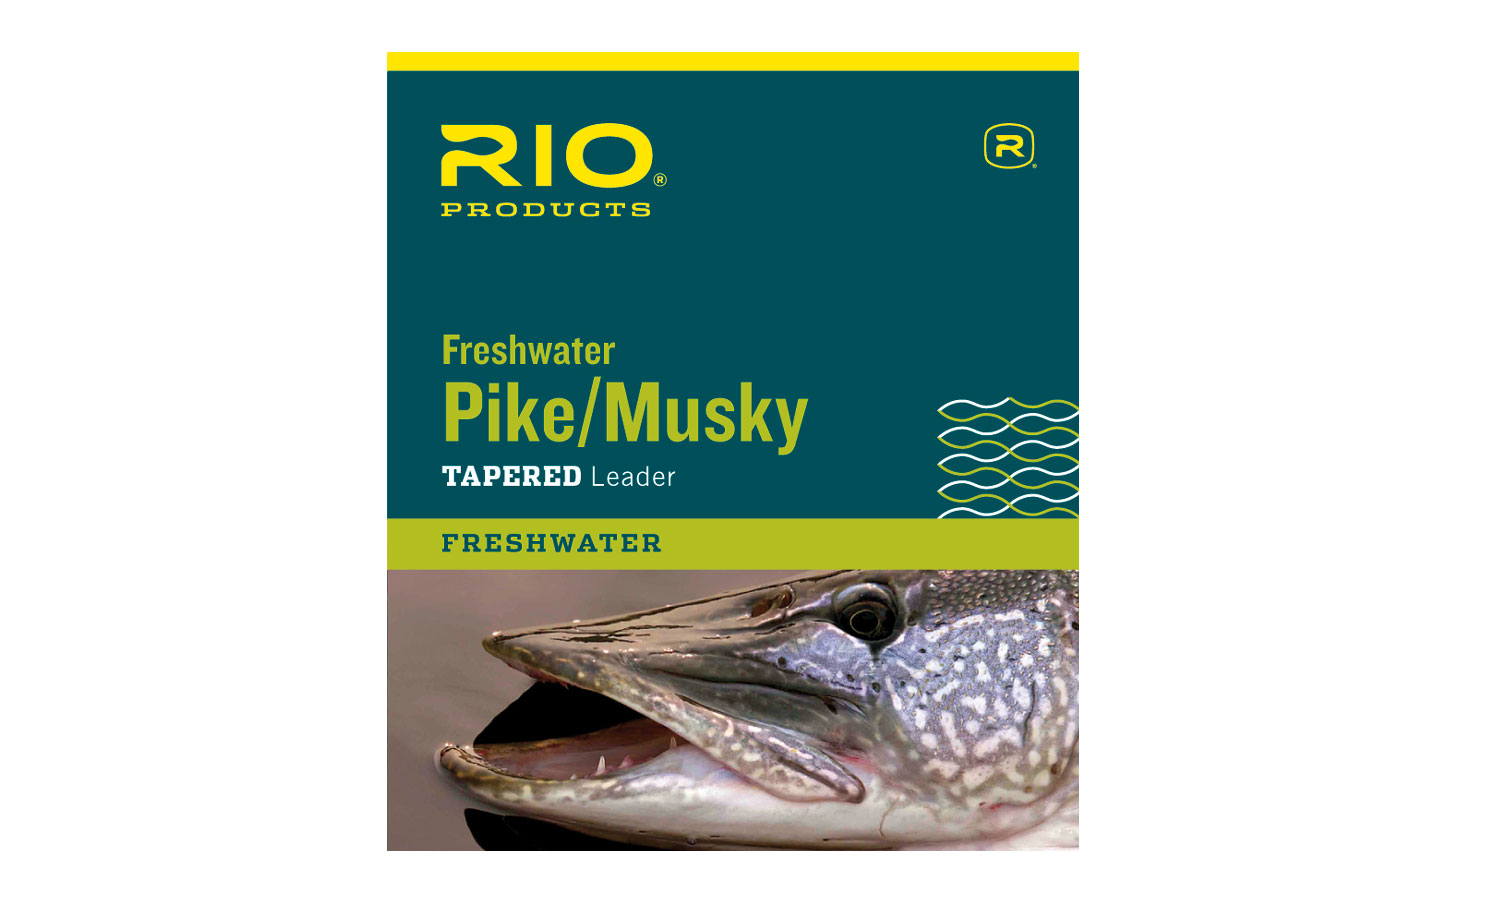 RIO 9' Steelhead/Salmon Knotless Fly Leader - 3 Pack